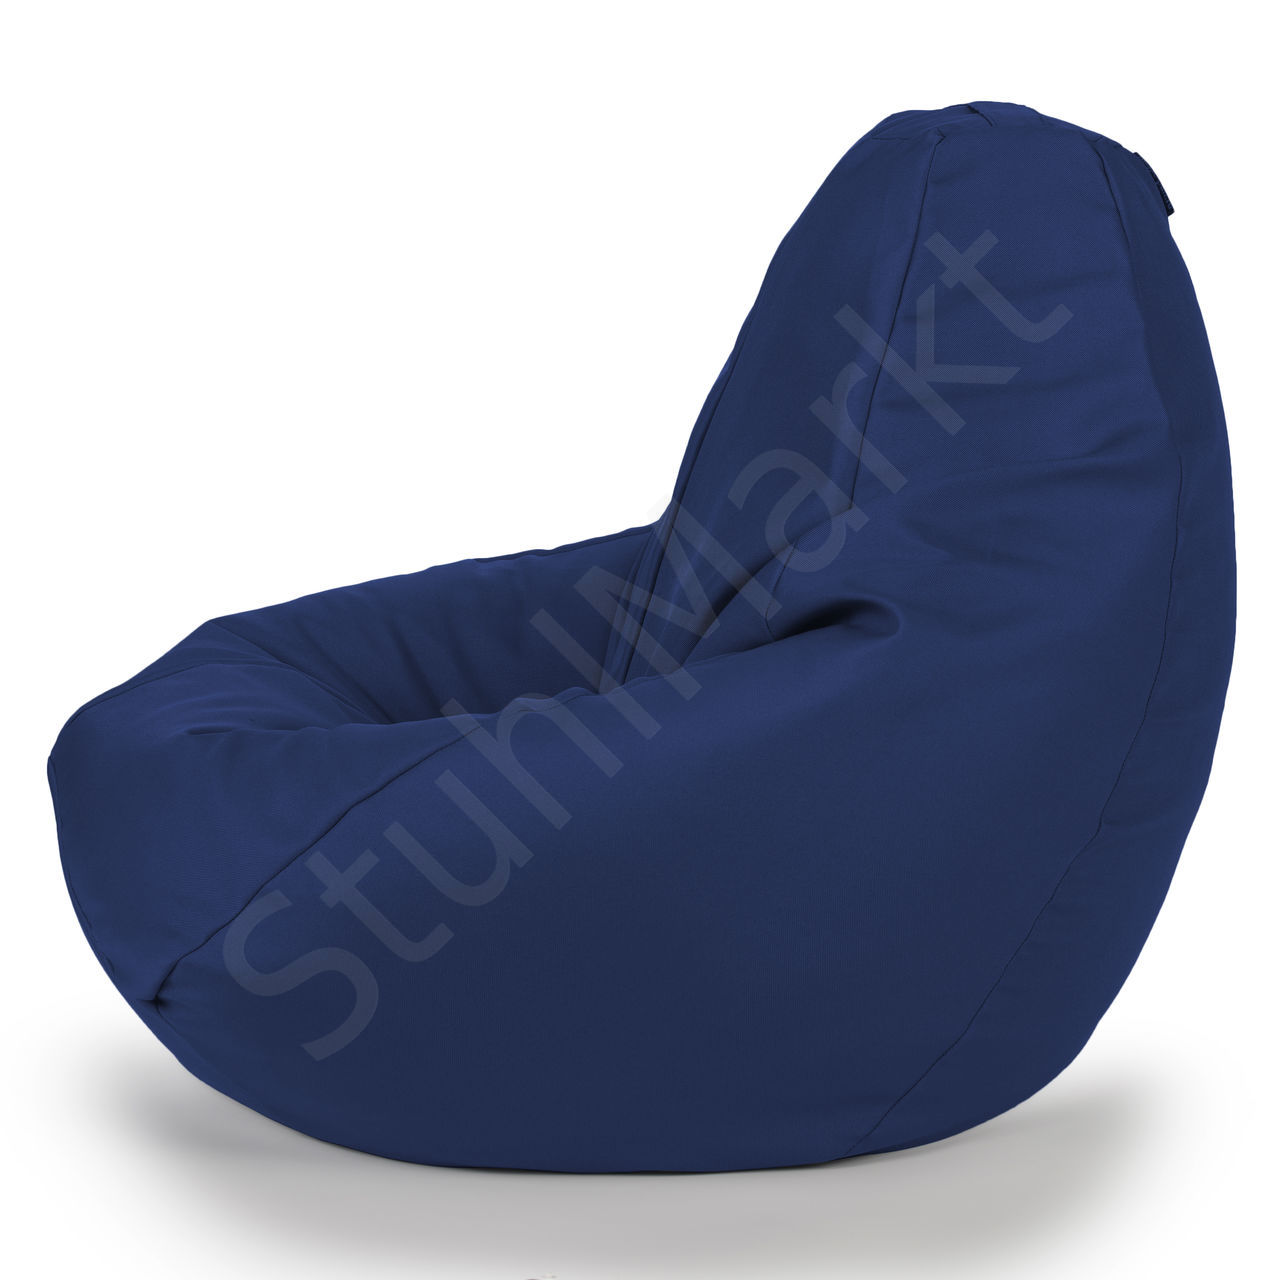  Бескаркасное кресло-мешок Mira Blue XL 6772